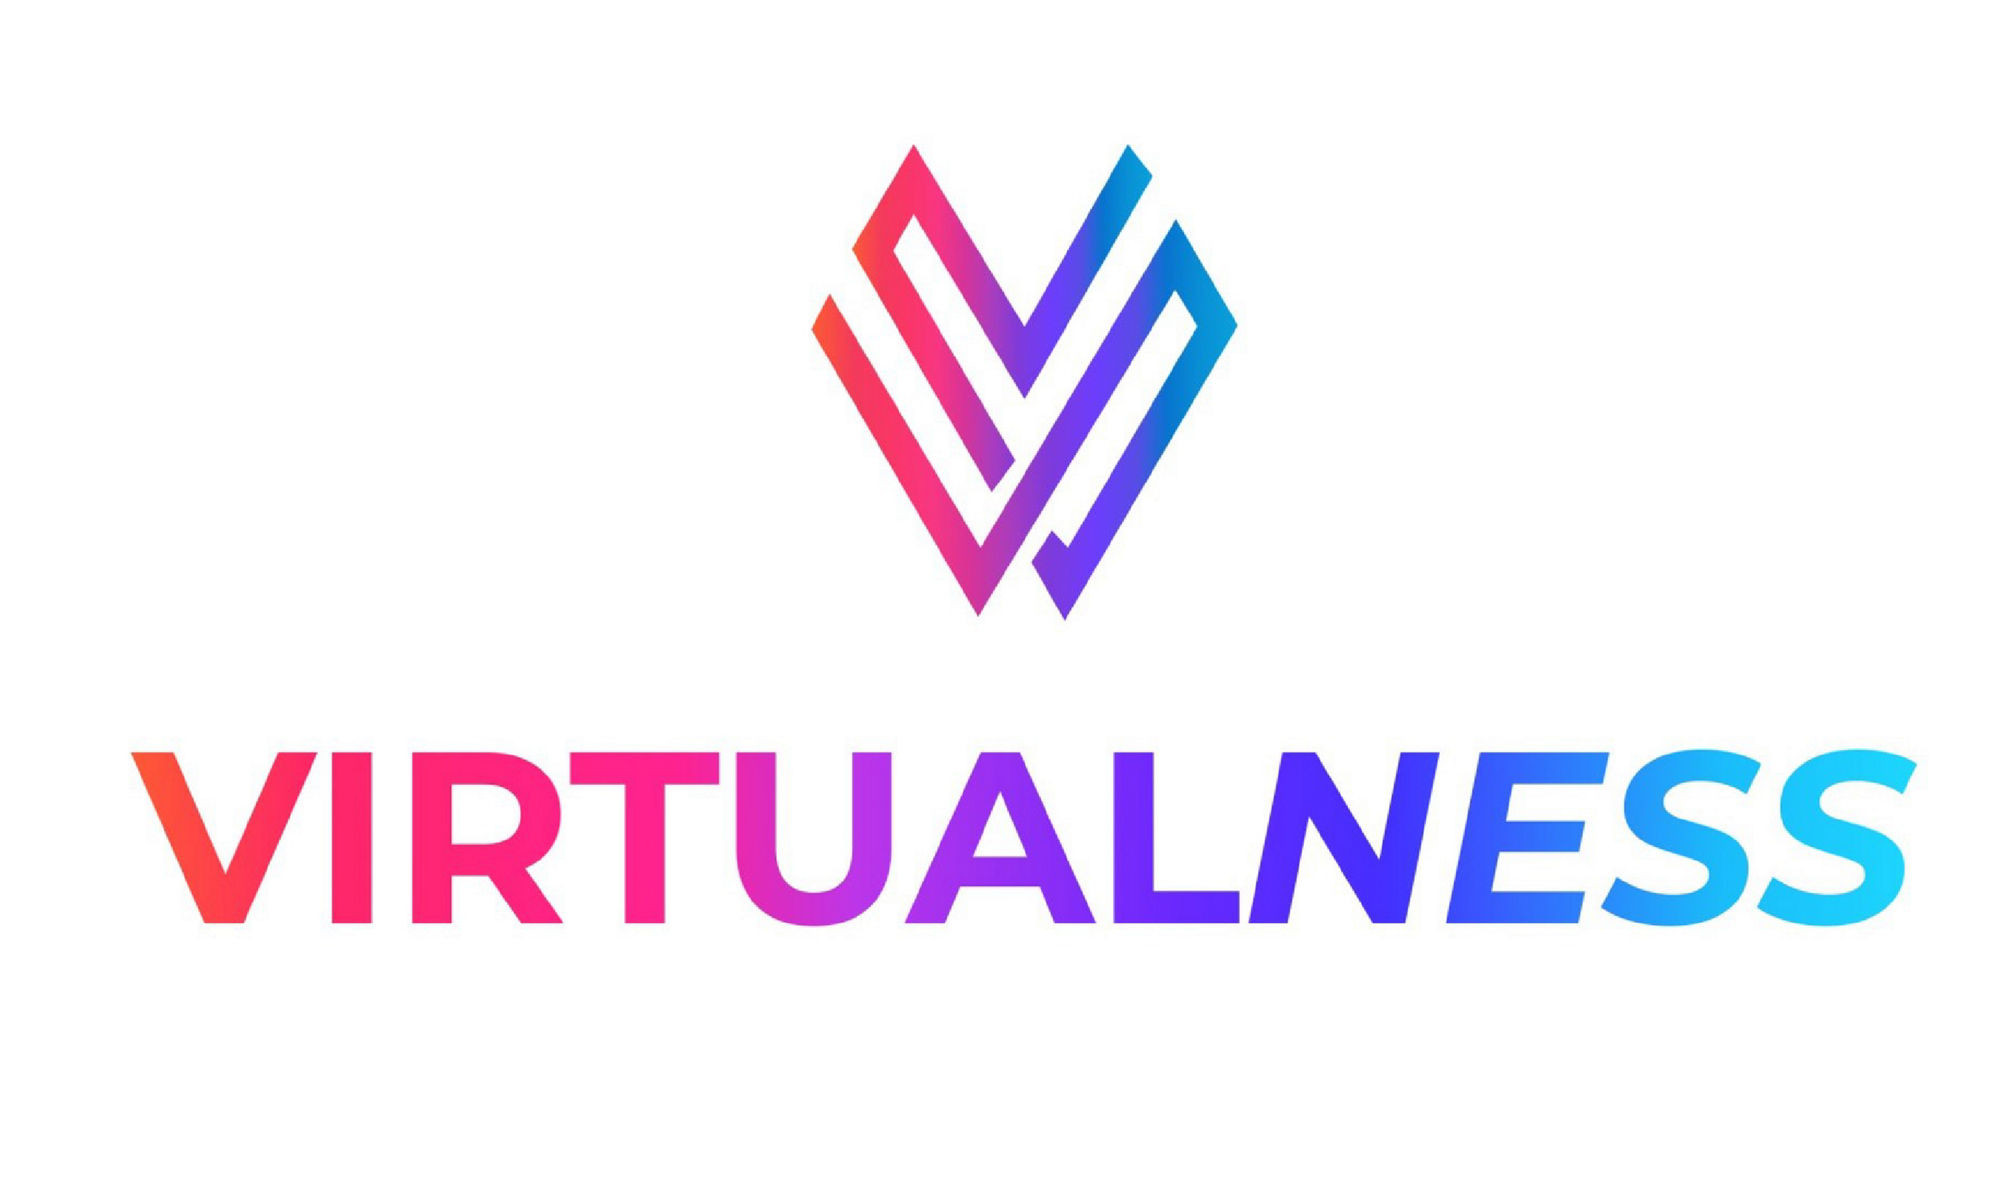 Virtualness company logo